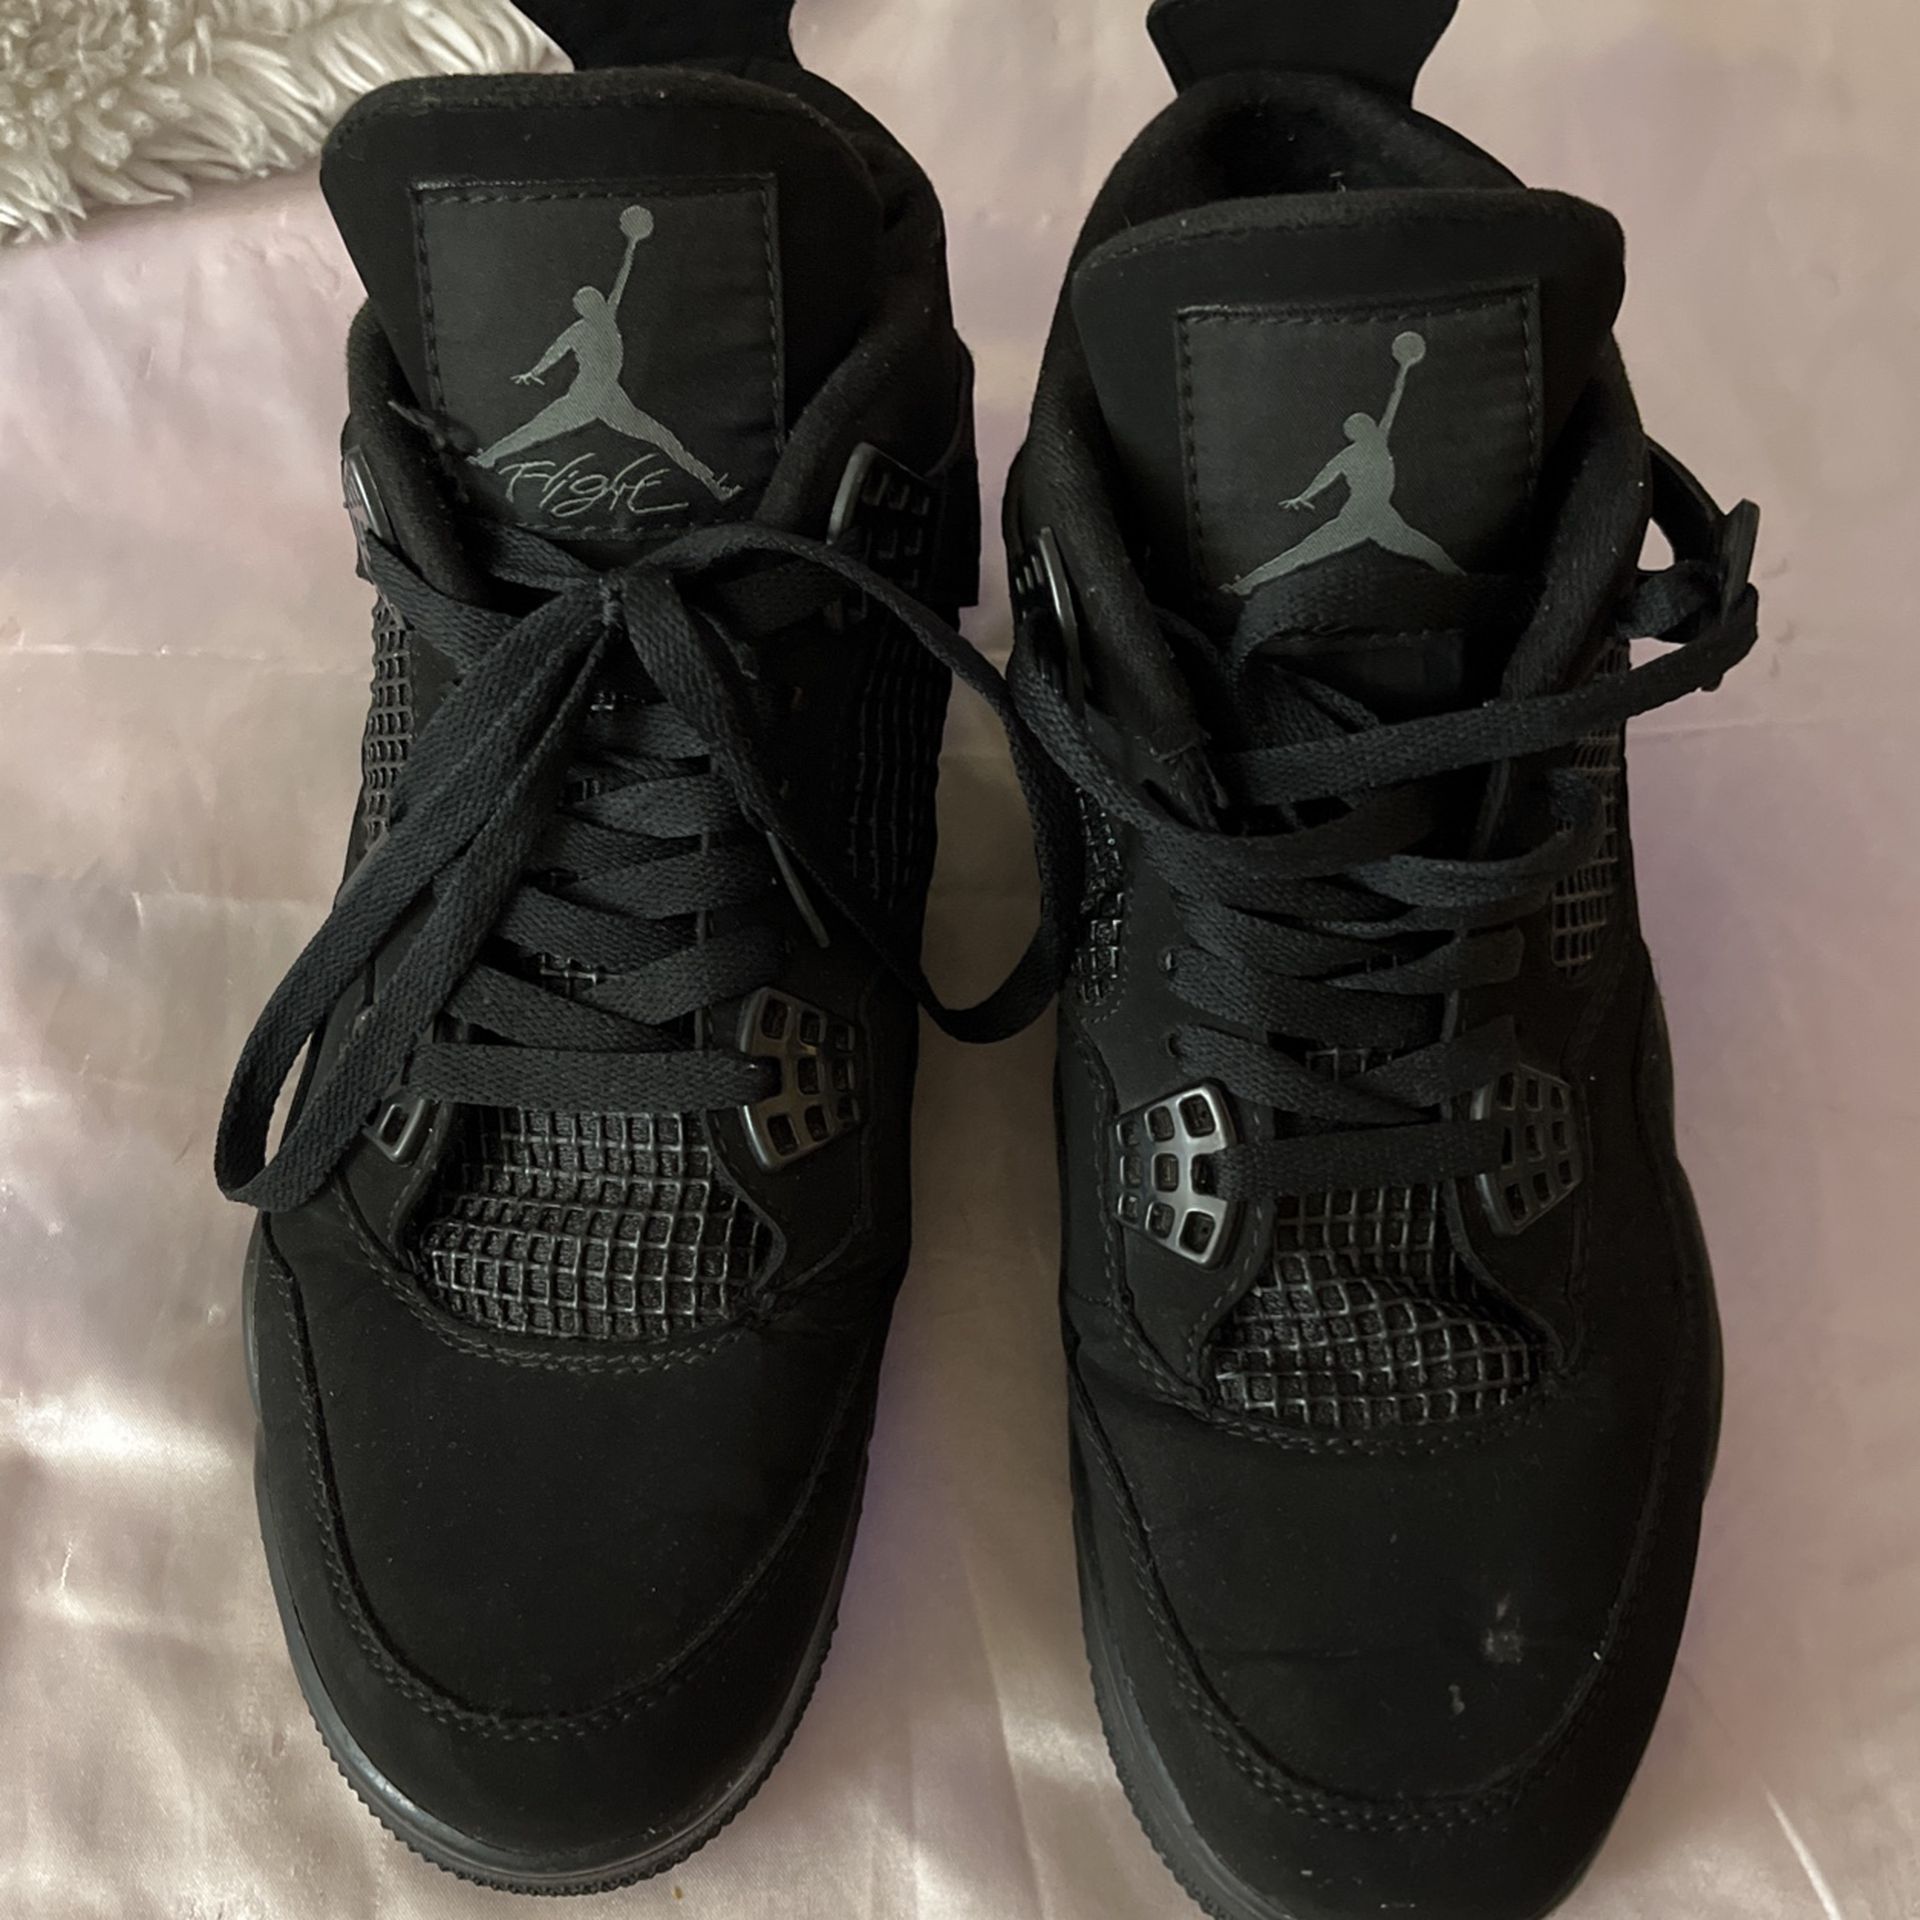 Air, Jordans, black cats